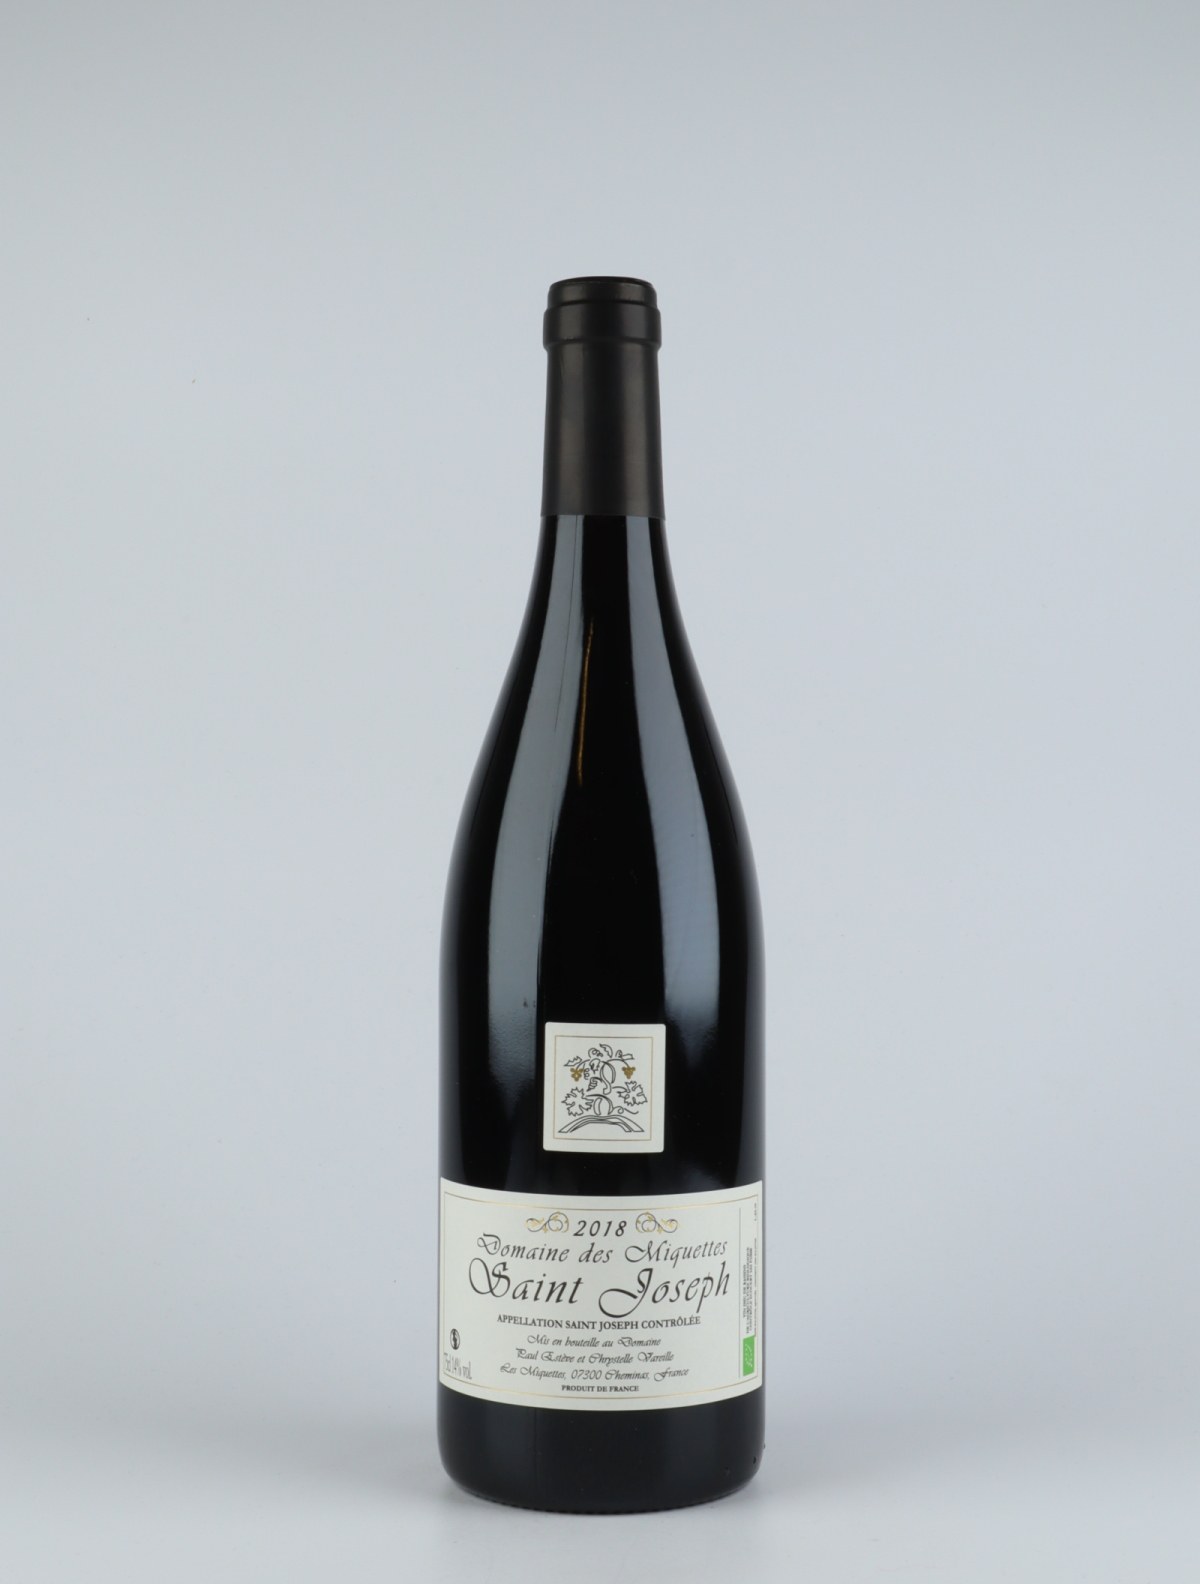 A bottle 2018 Saint-Joseph Rouge Red wine from Domaine des Miquettes, Rhône in France